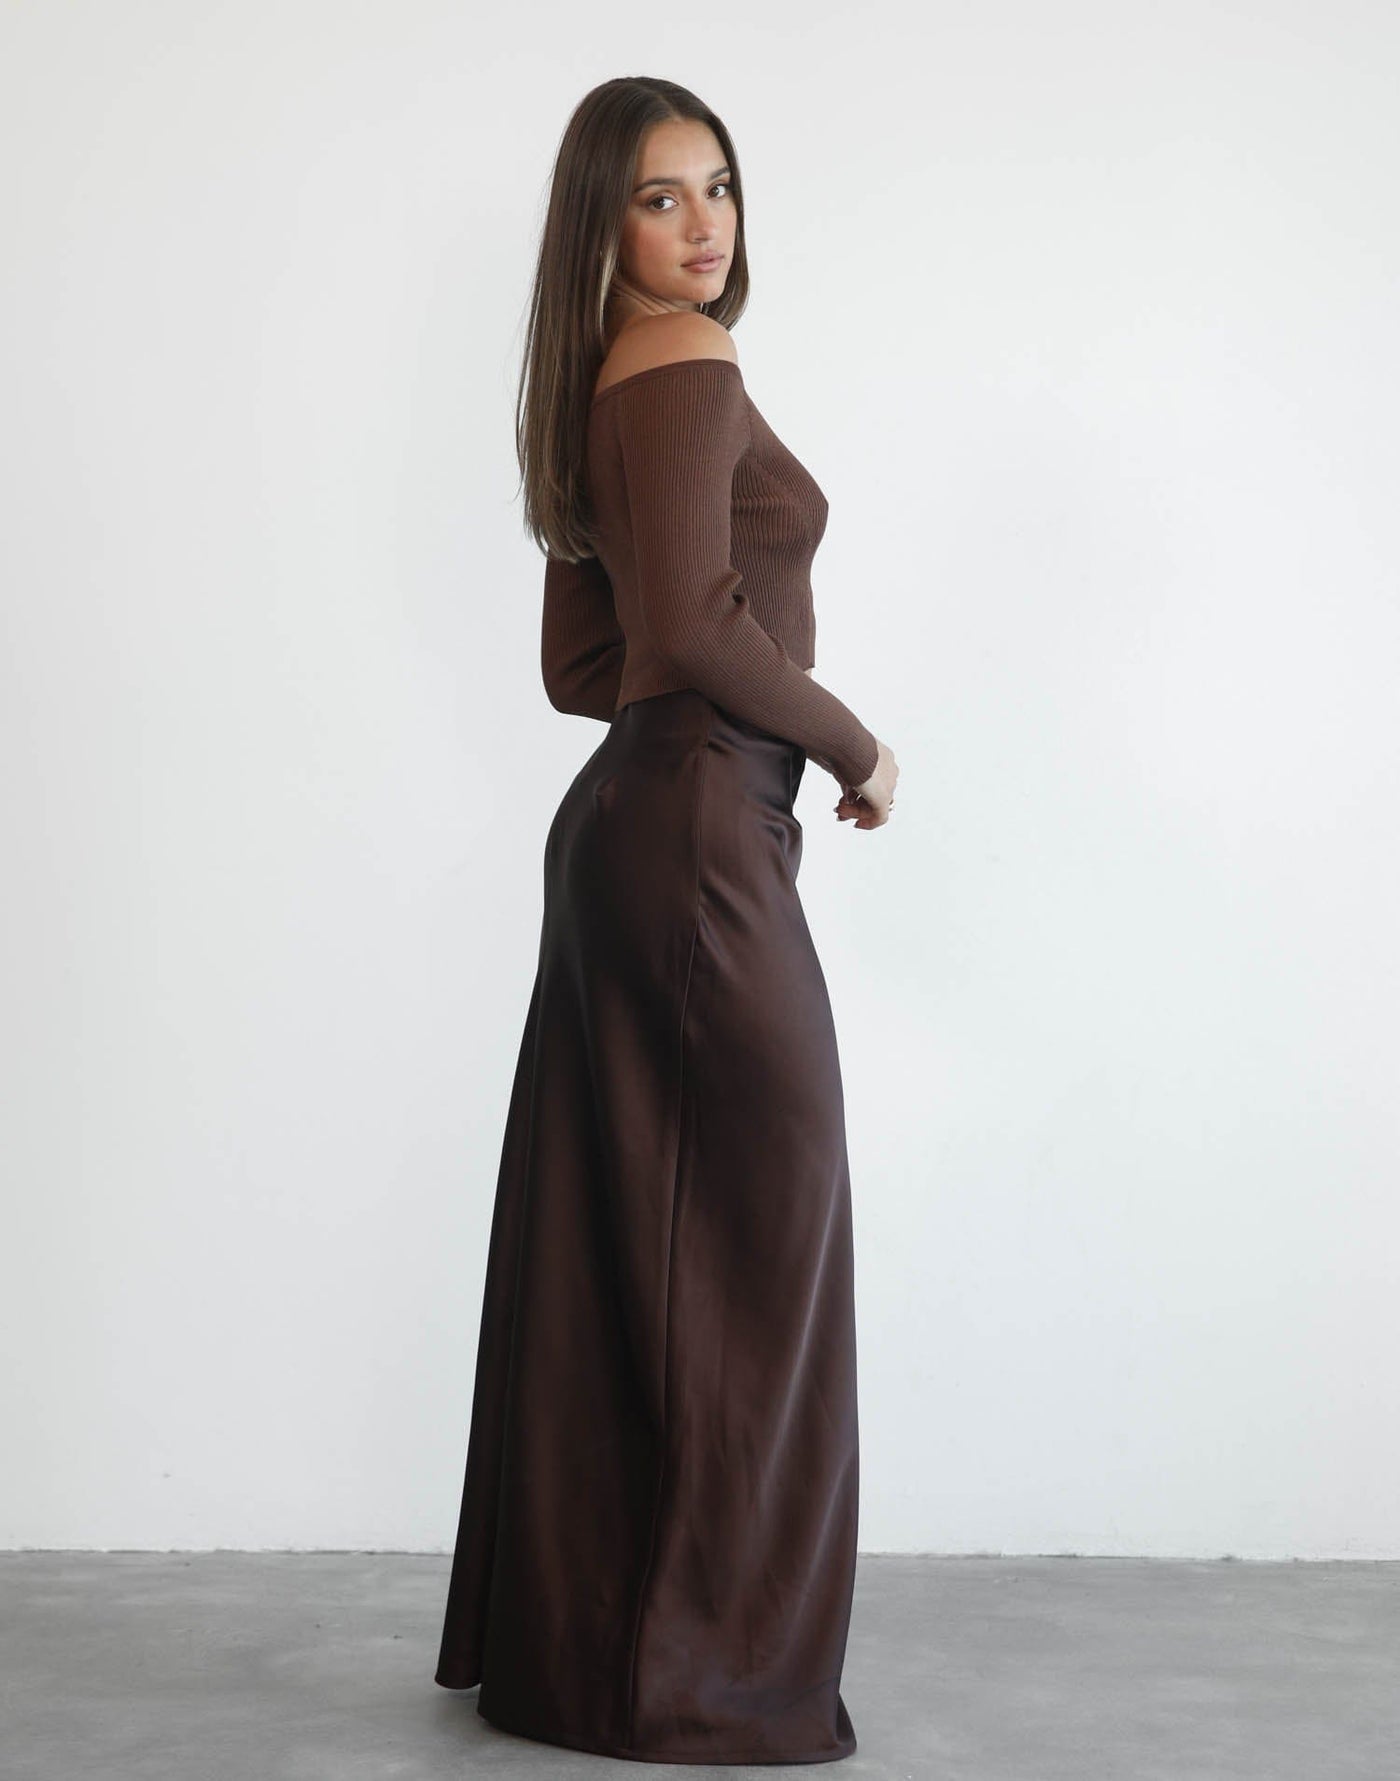 Adriel Long Sleeve Top (Brown) - Brown Long Sleeve Top - Women's Tops - Charcoal Clothing